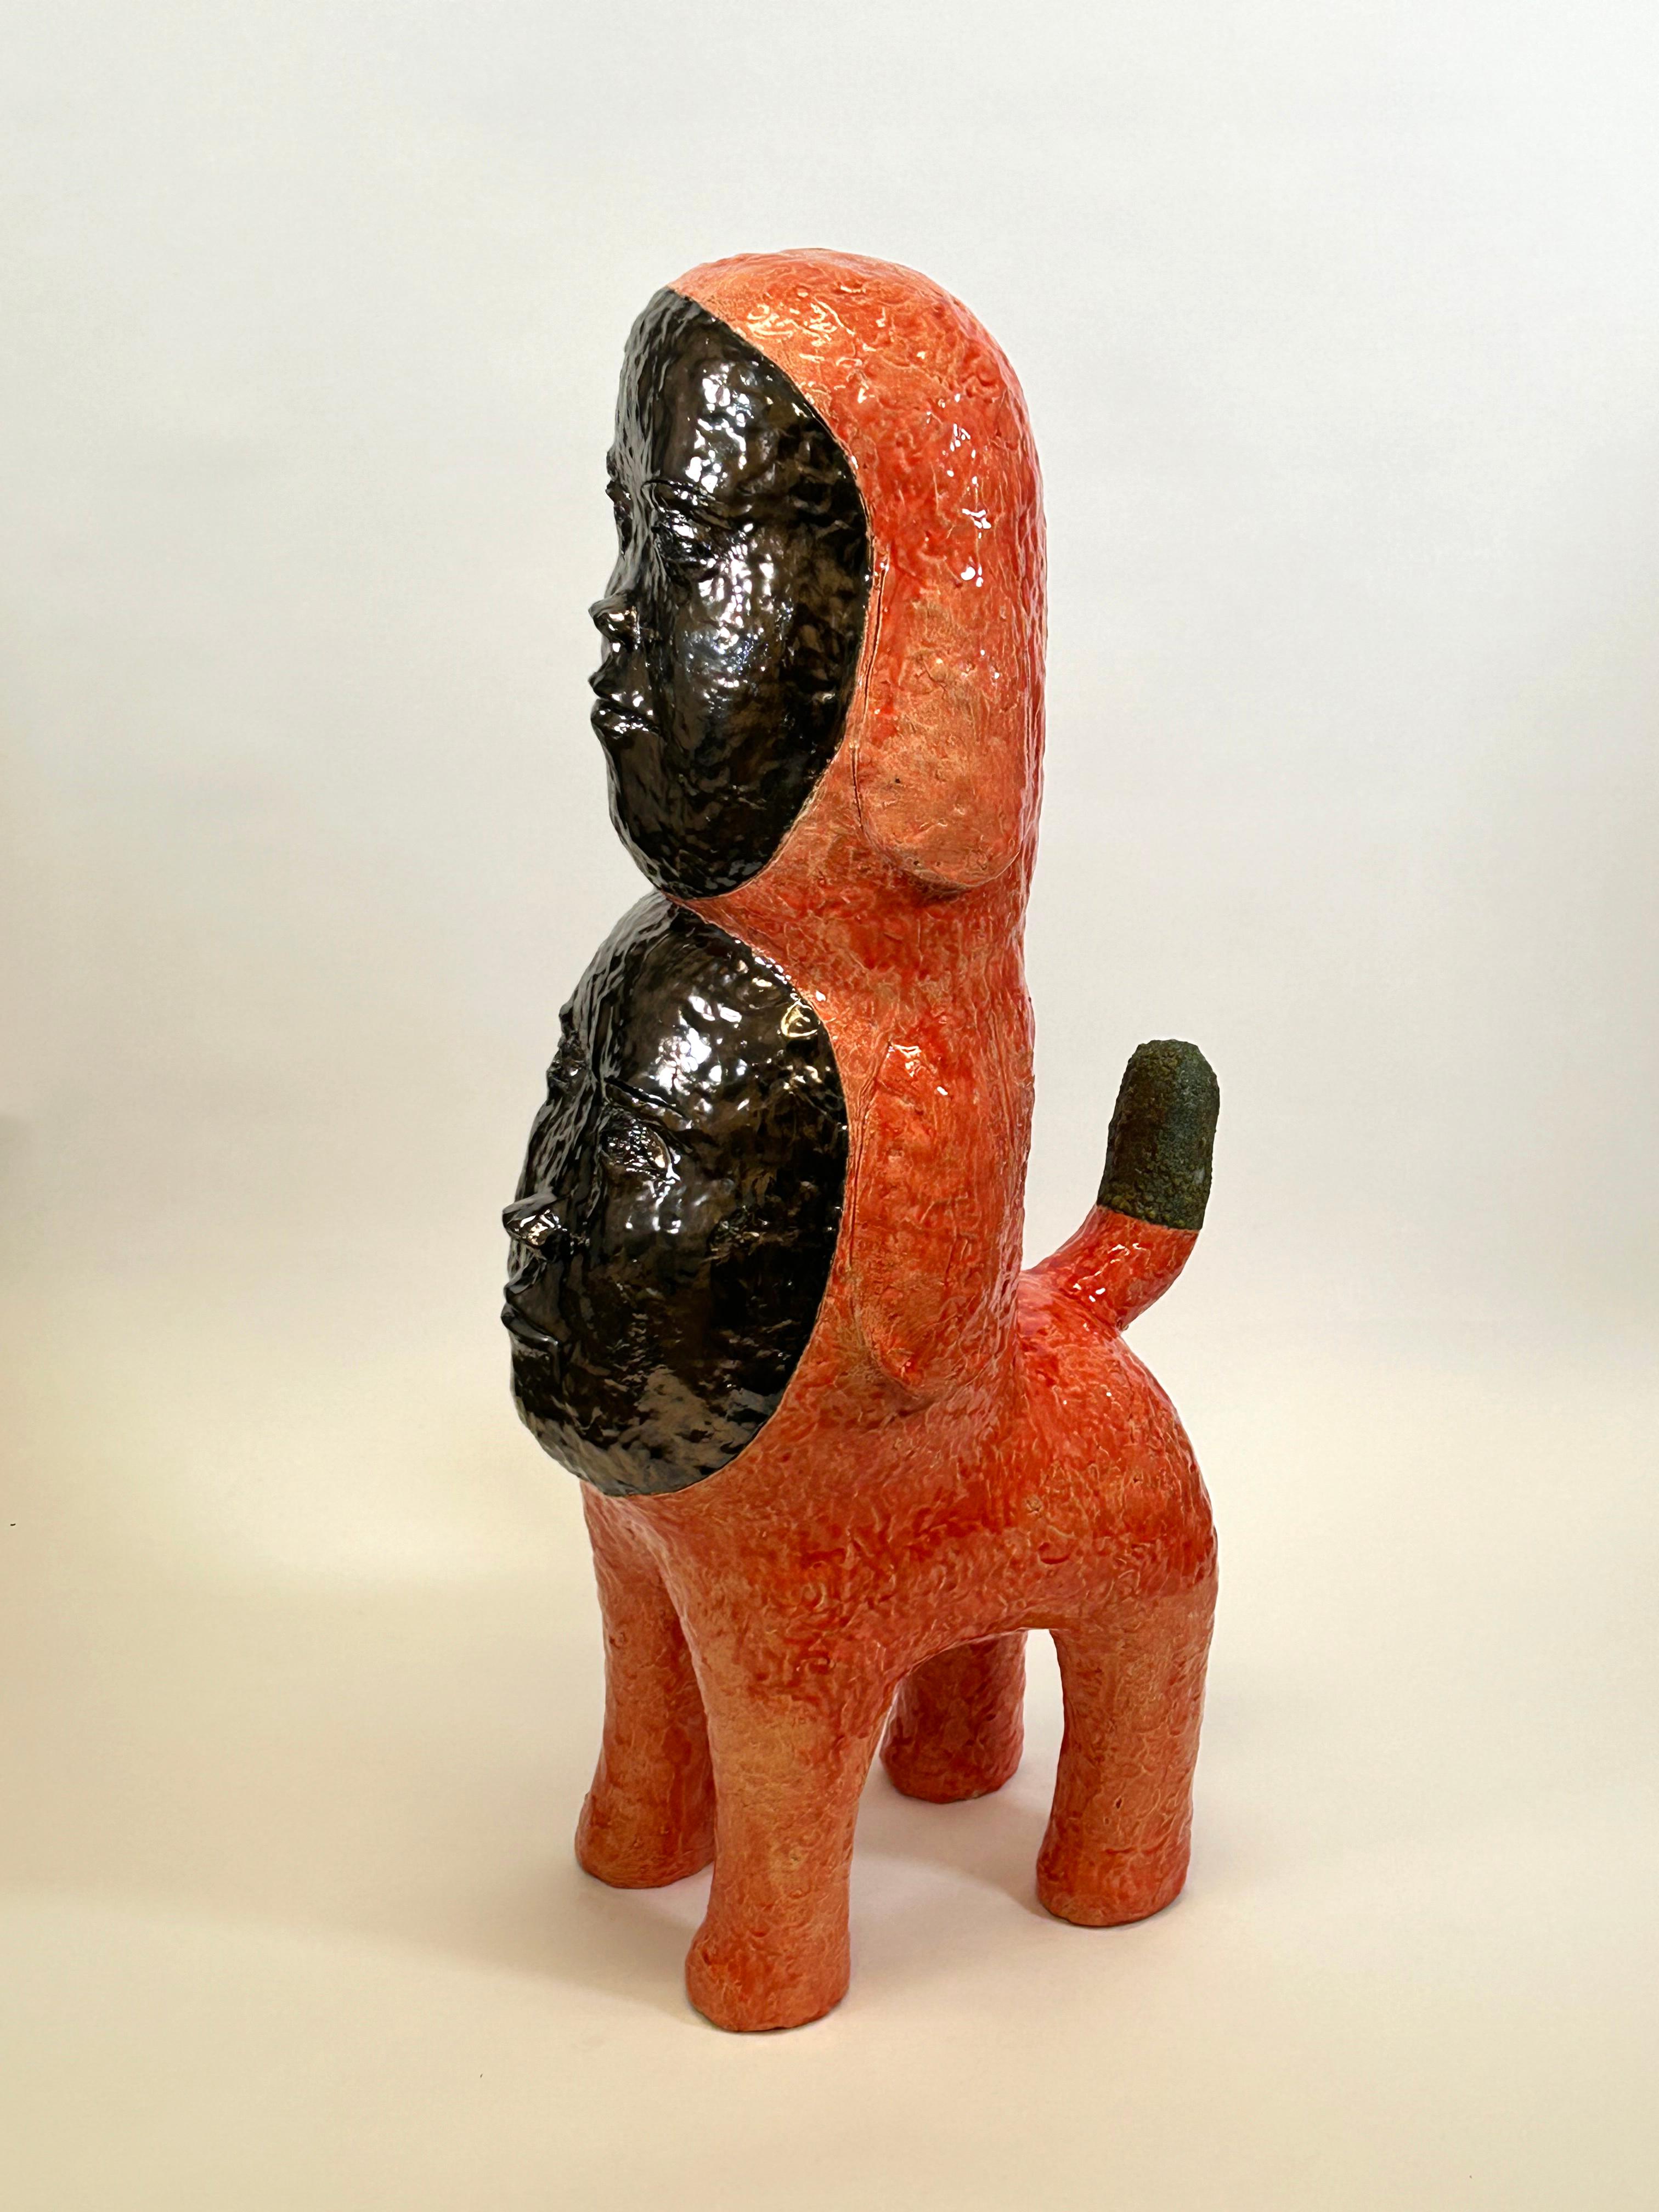 Kensuke Yamada Figurative Sculpture - "Dog", Figurative, Ceramic, Sculpture, Surrealist, Stoneware, Glaze